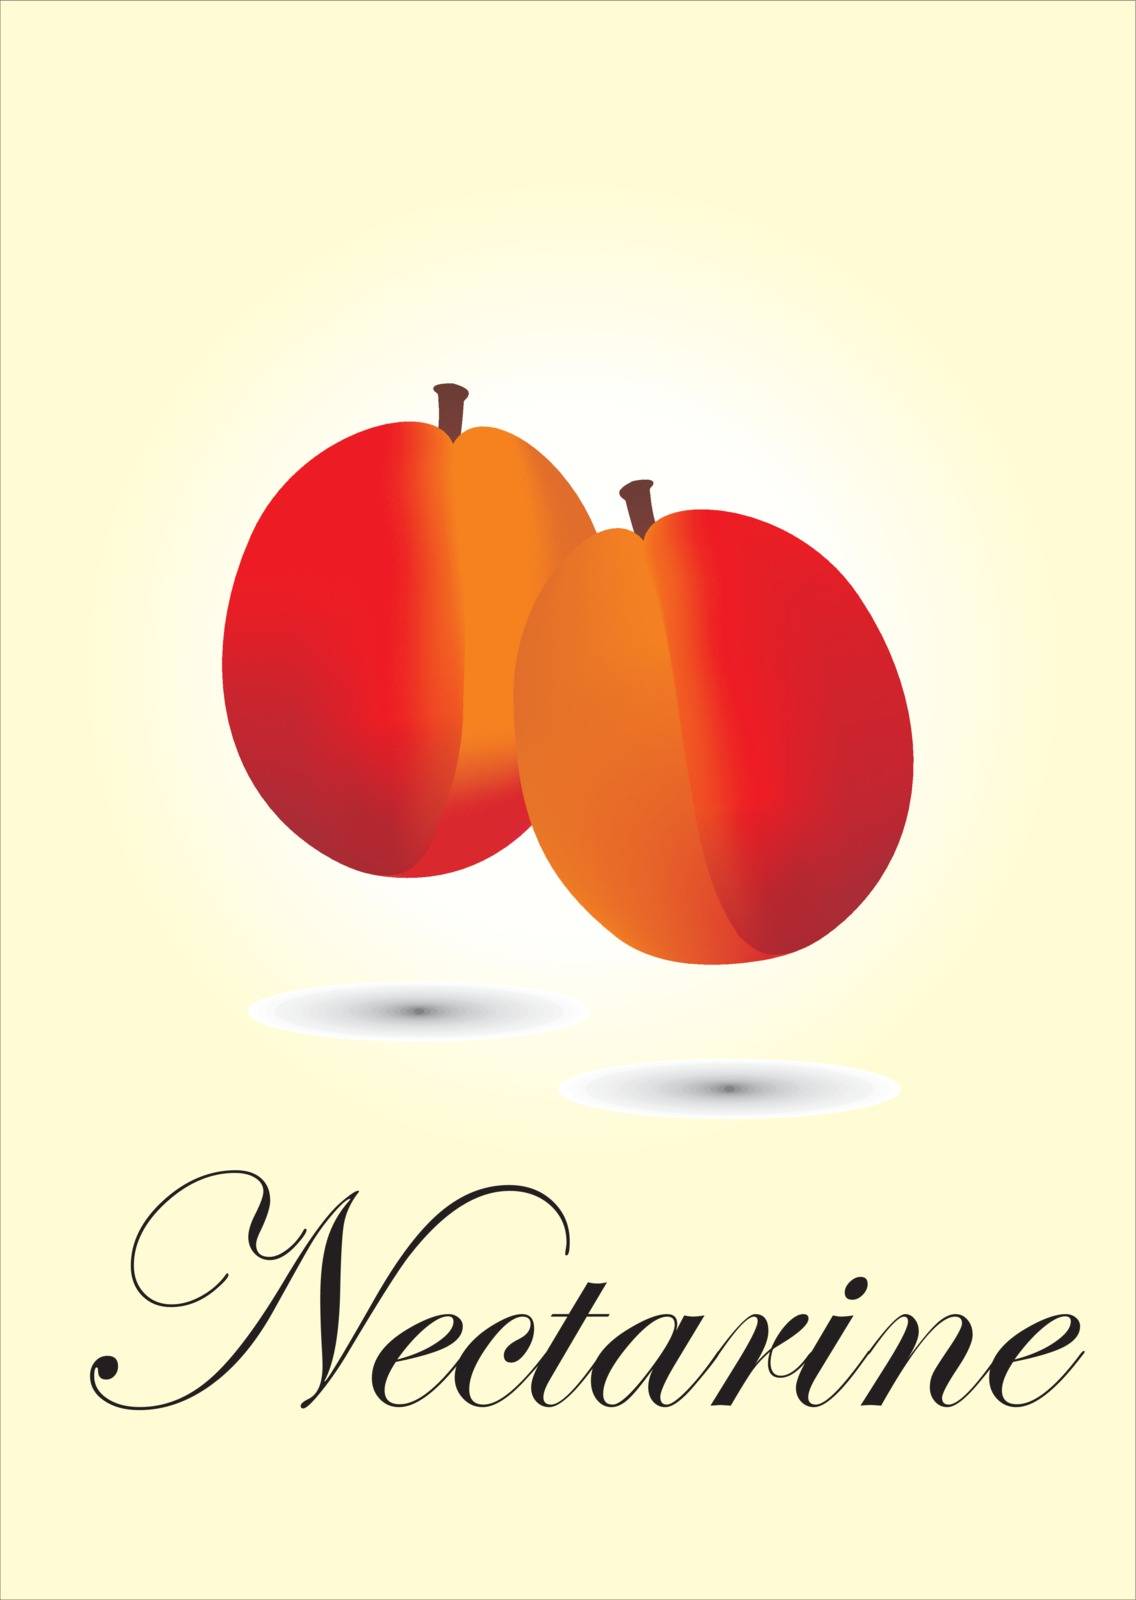 Nectarine chart vector illustration